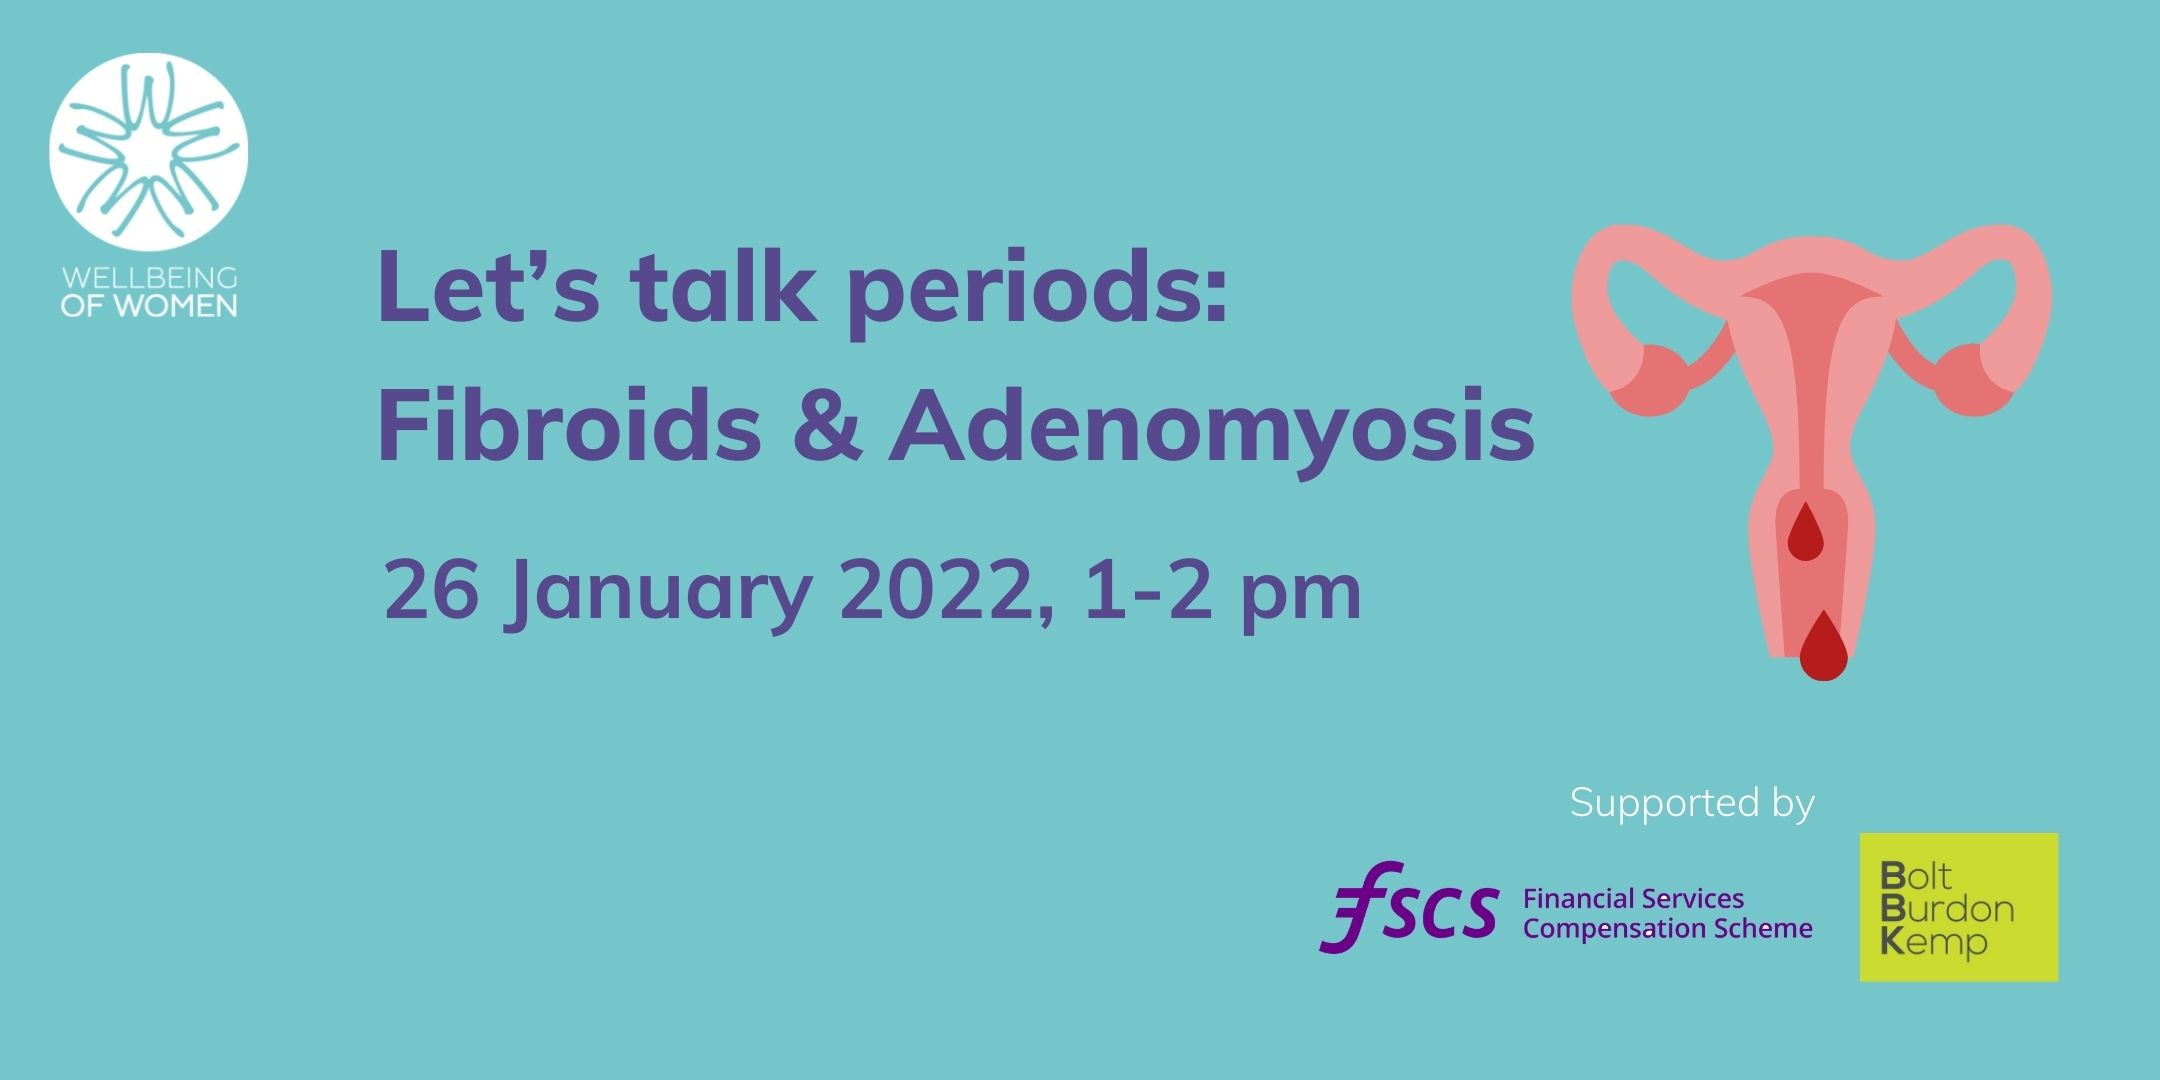 Let’s talk periods- Fibroids & Adenomyosis